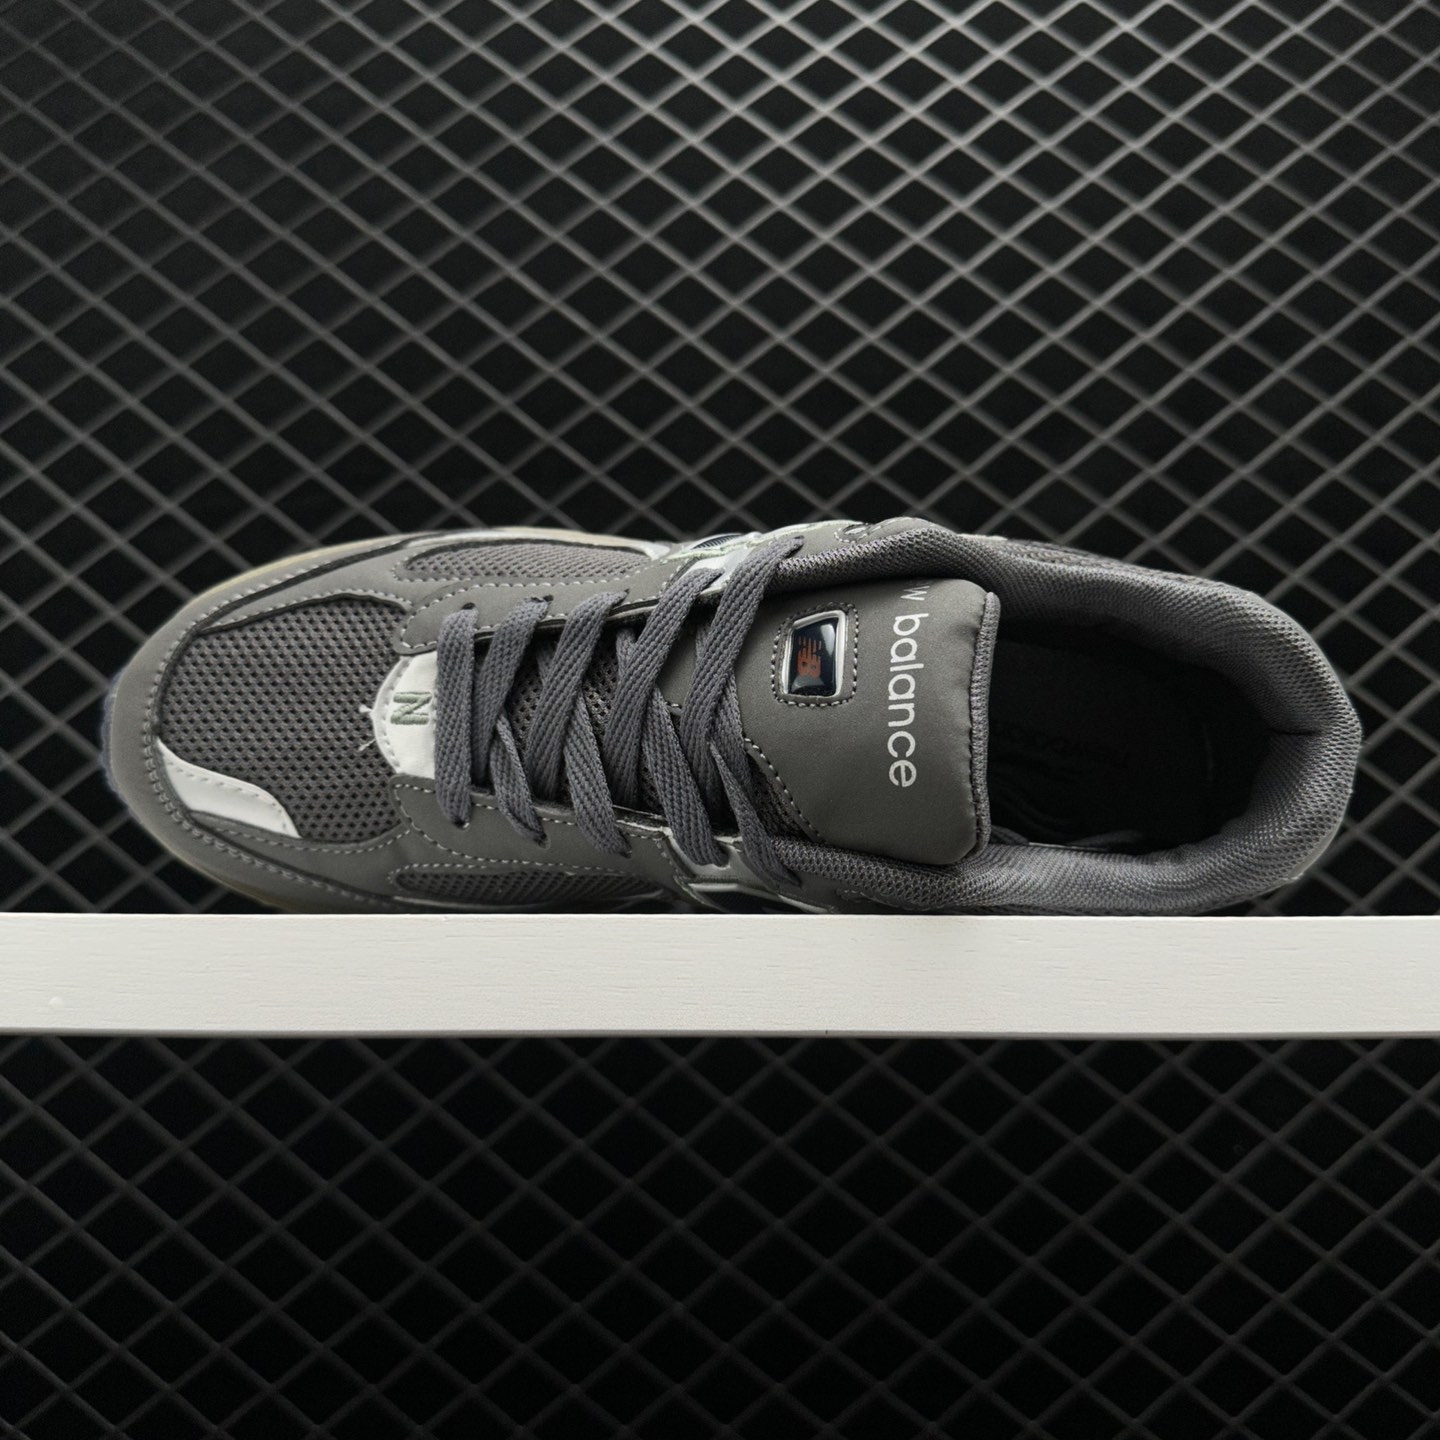 New Balance 2002R Light Grey Black - Trendy Athletic Sneakers